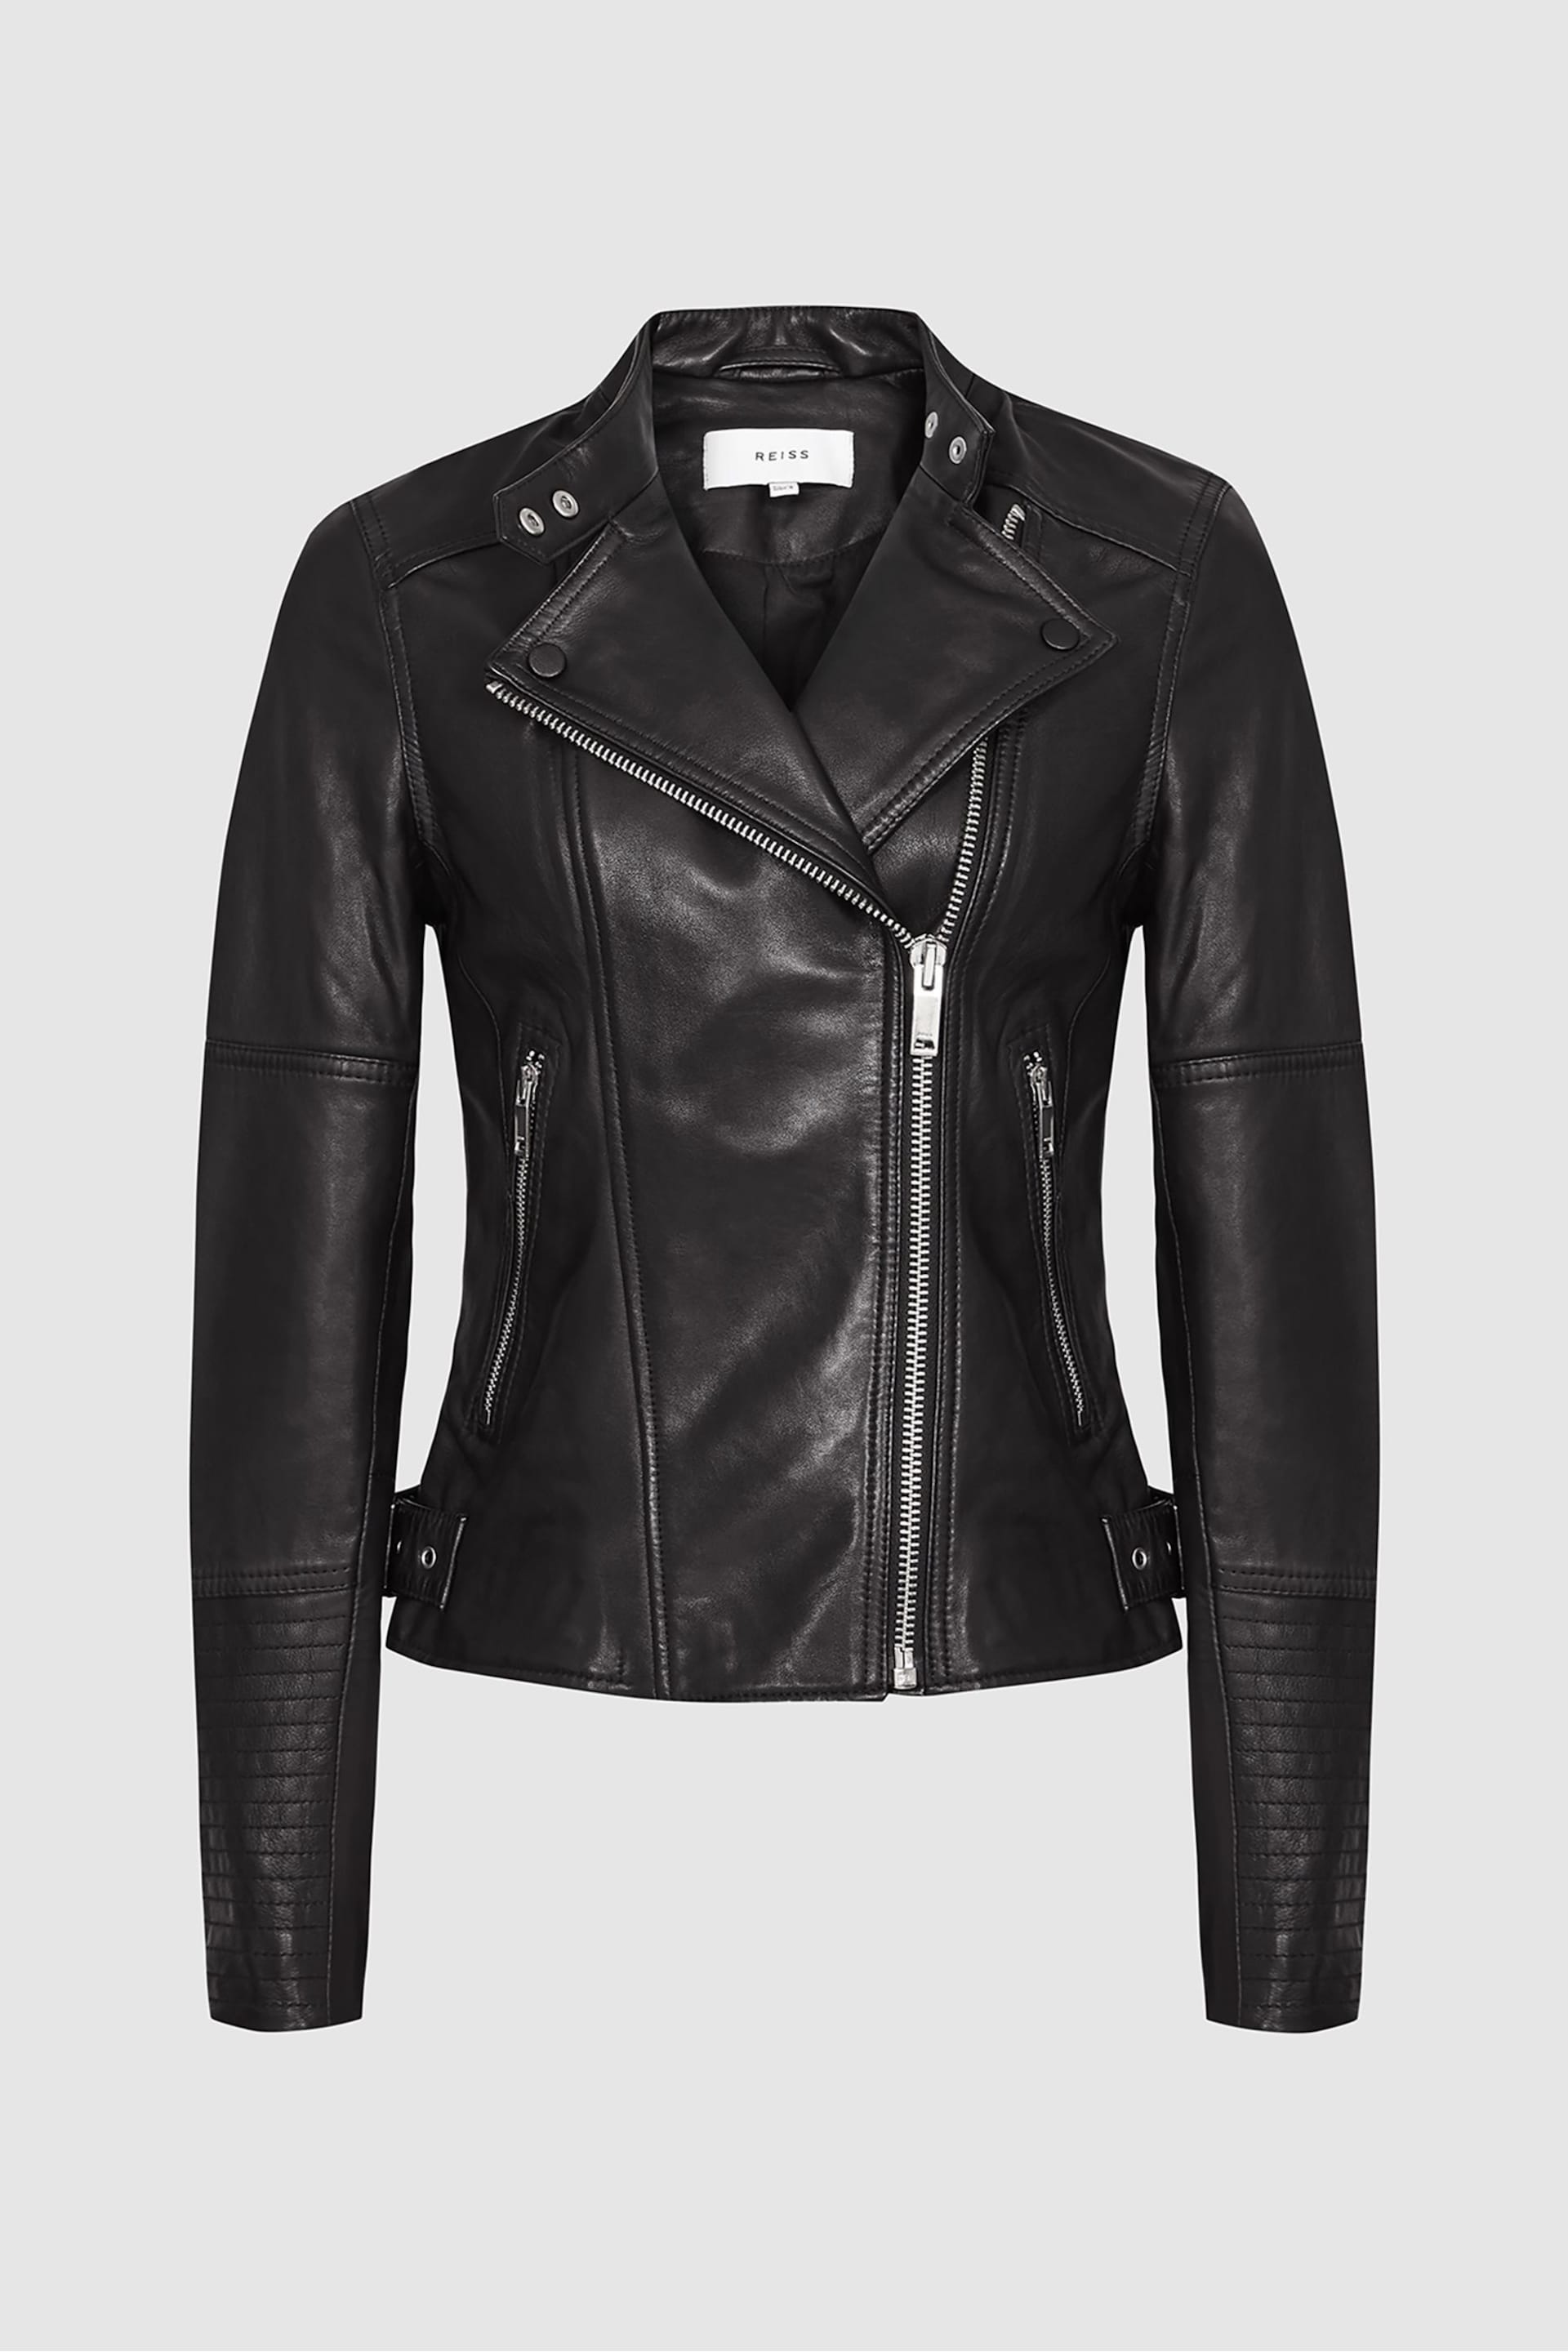 Reiss Black Tallis Leather Biker Jacket - Image 2 of 6